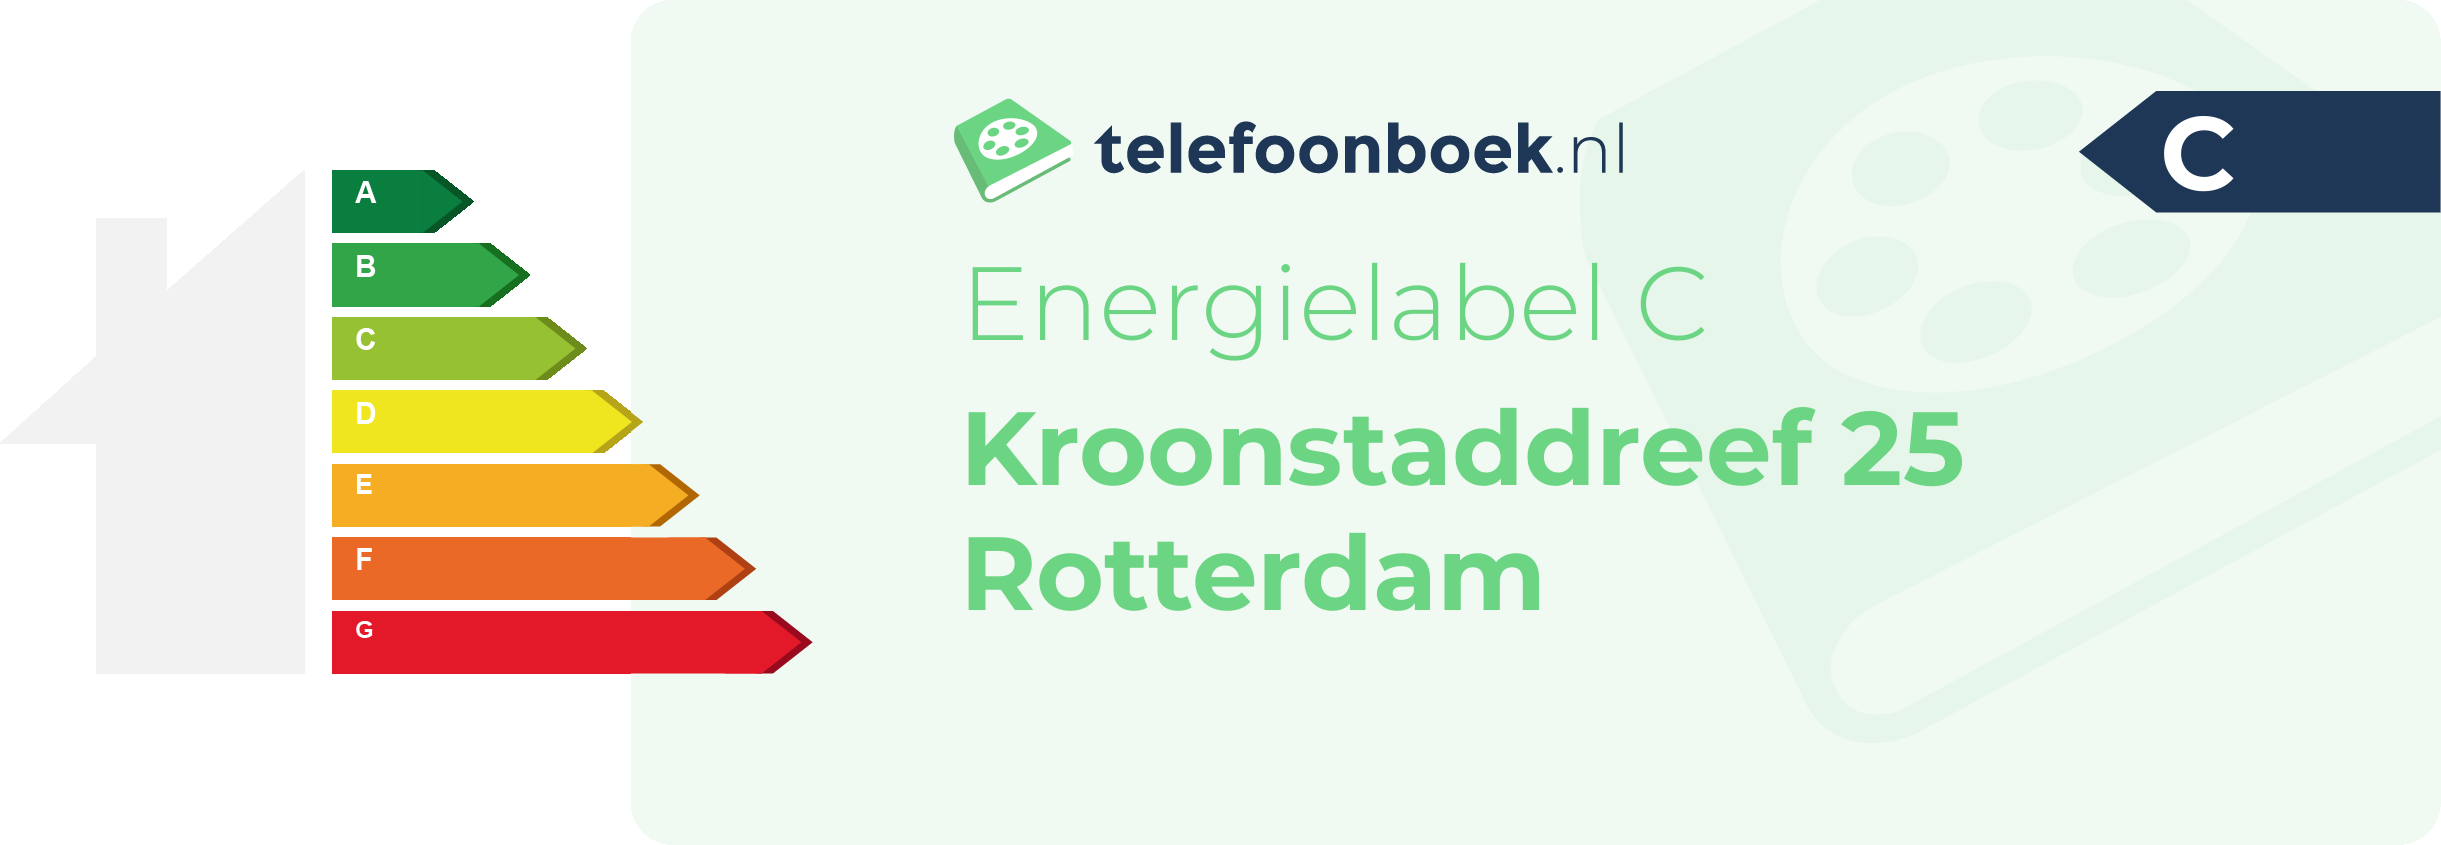 Energielabel Kroonstaddreef 25 Rotterdam